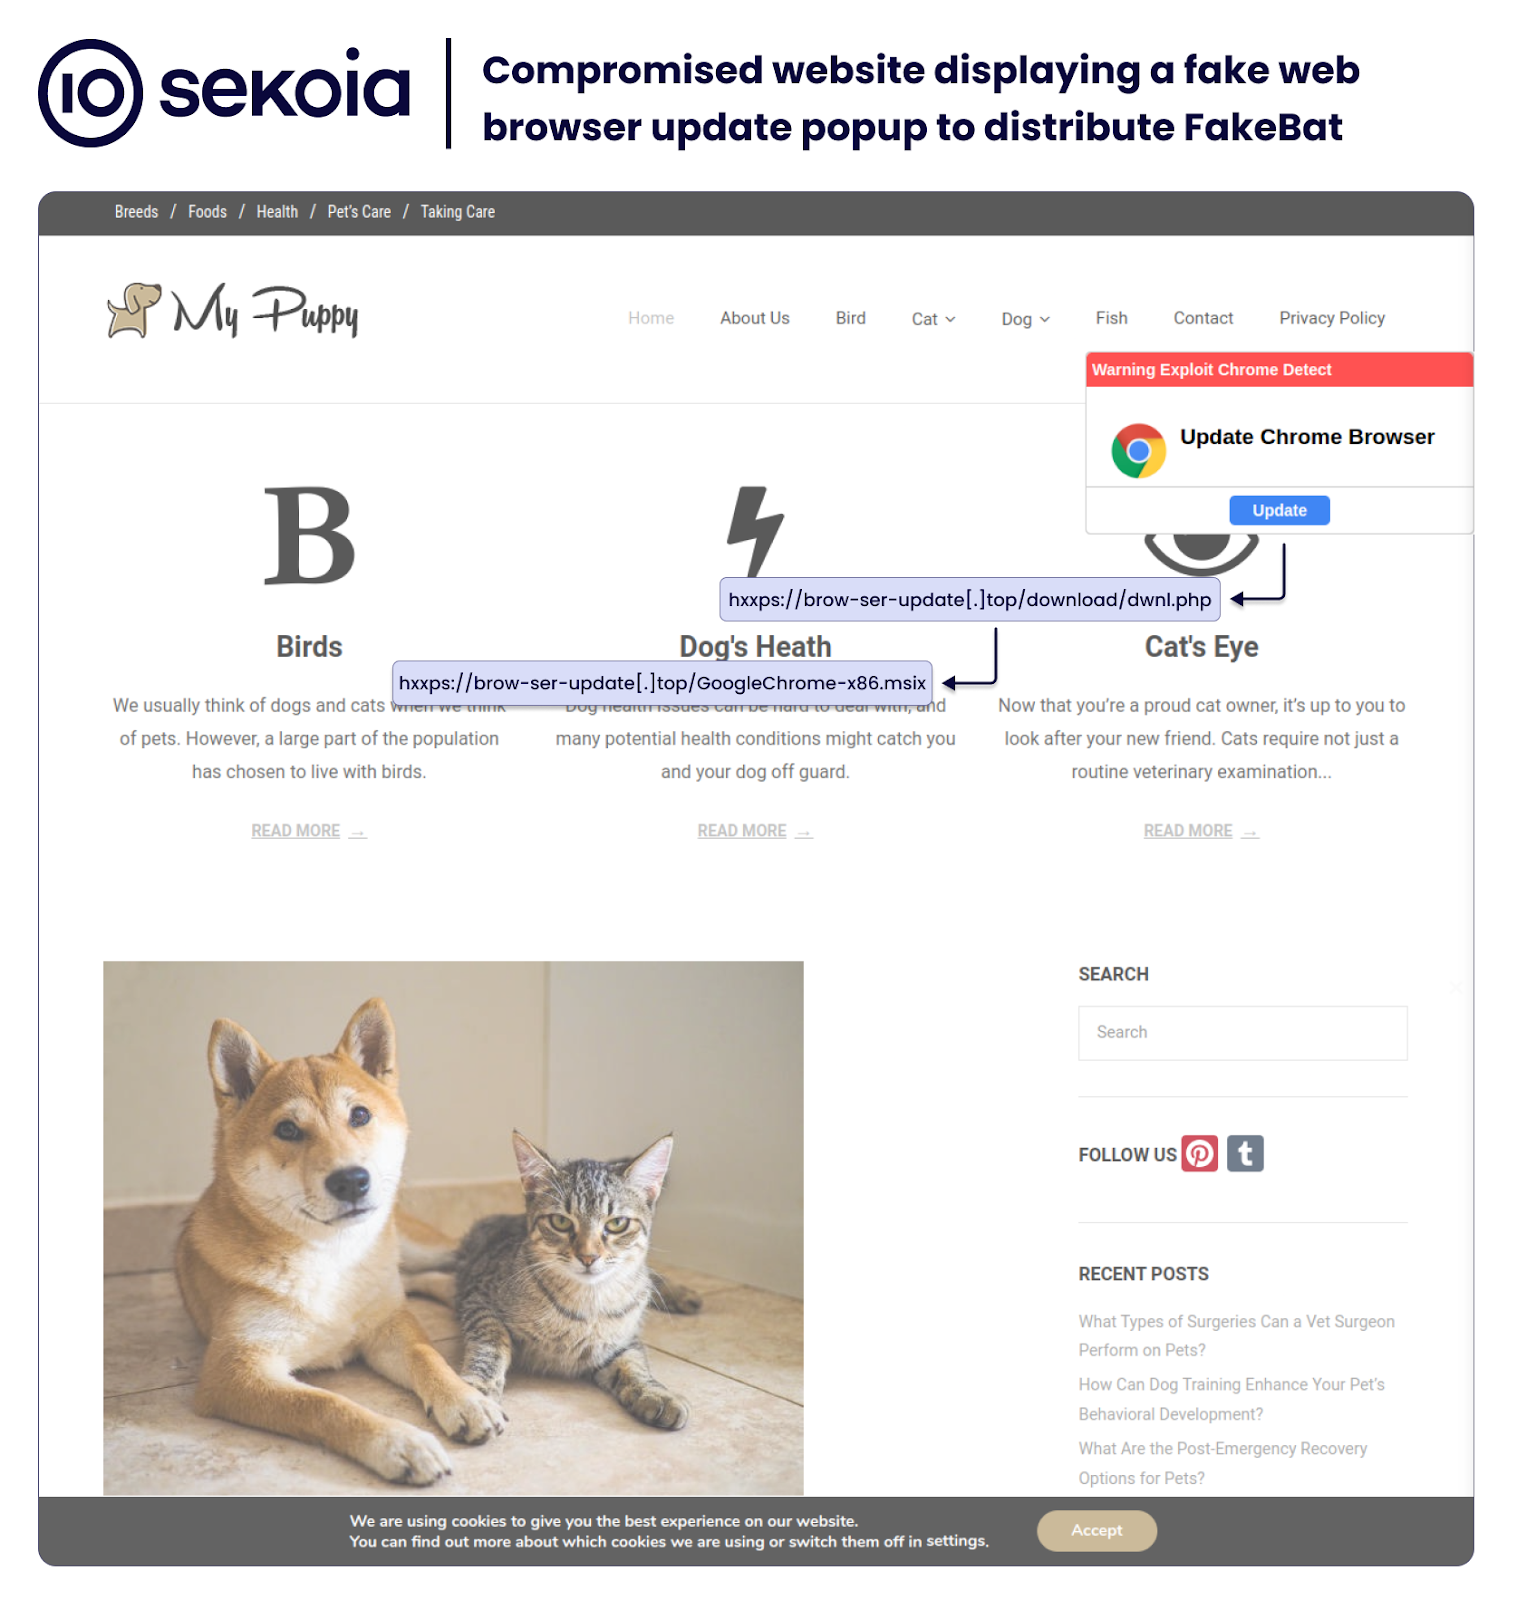 Compromised website displaying a fake web browser update popup to distribute FakeBat. Source: Sekoia TDR blog